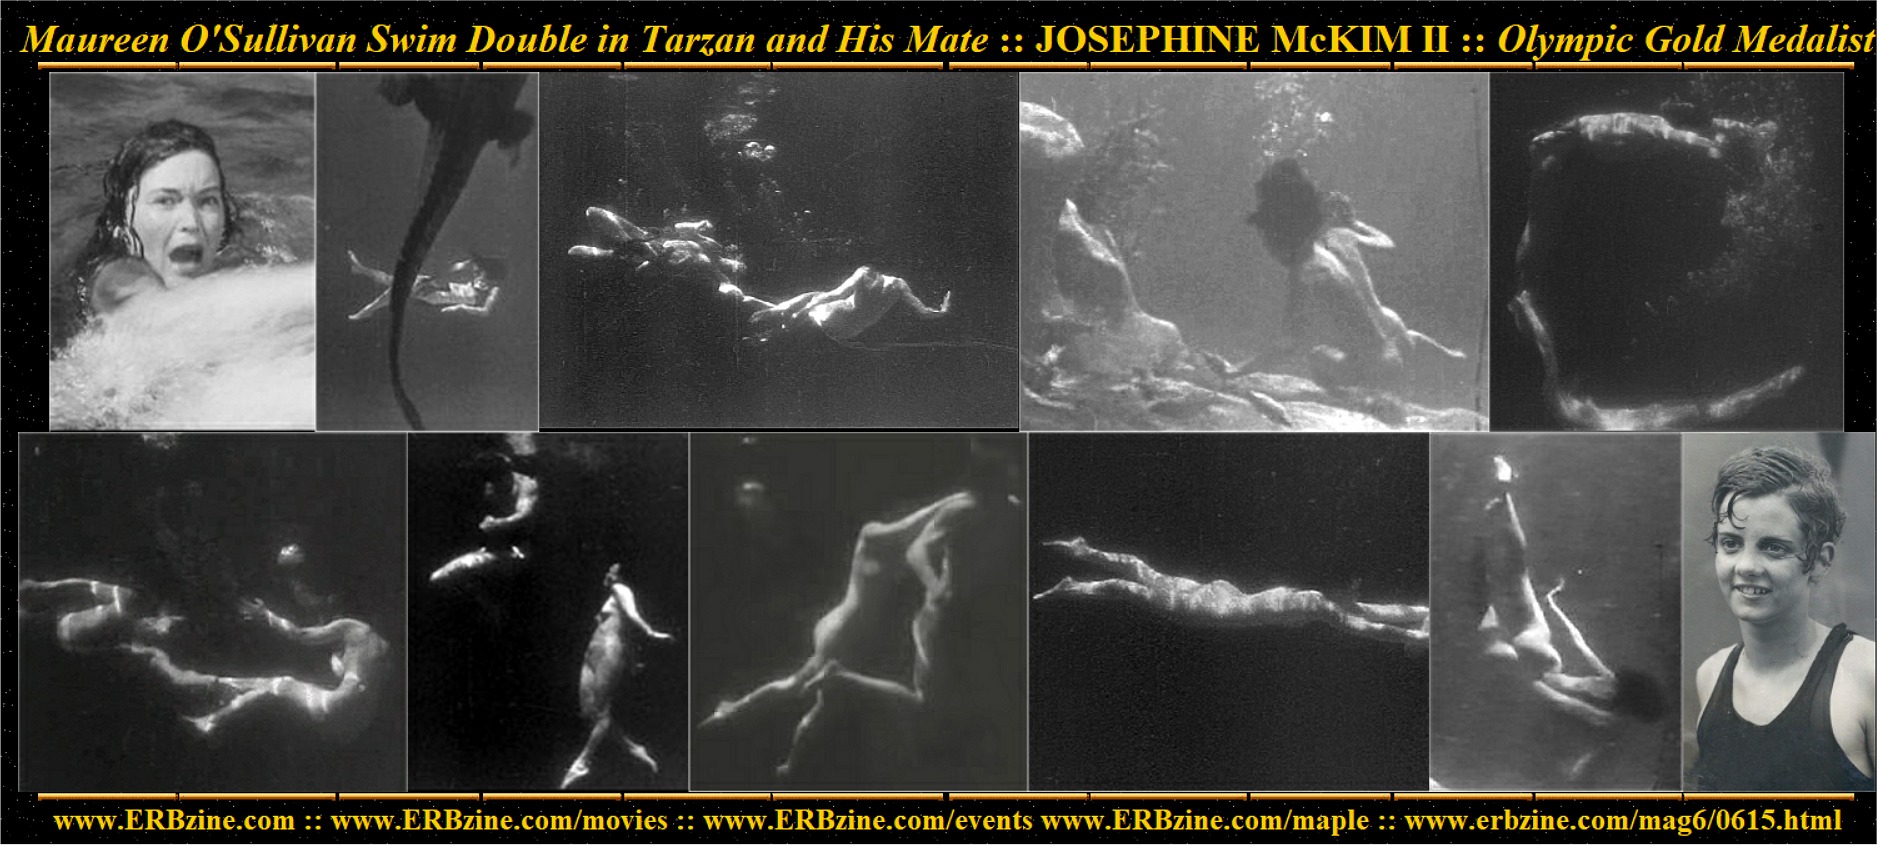 Tarzan and his mate swimming